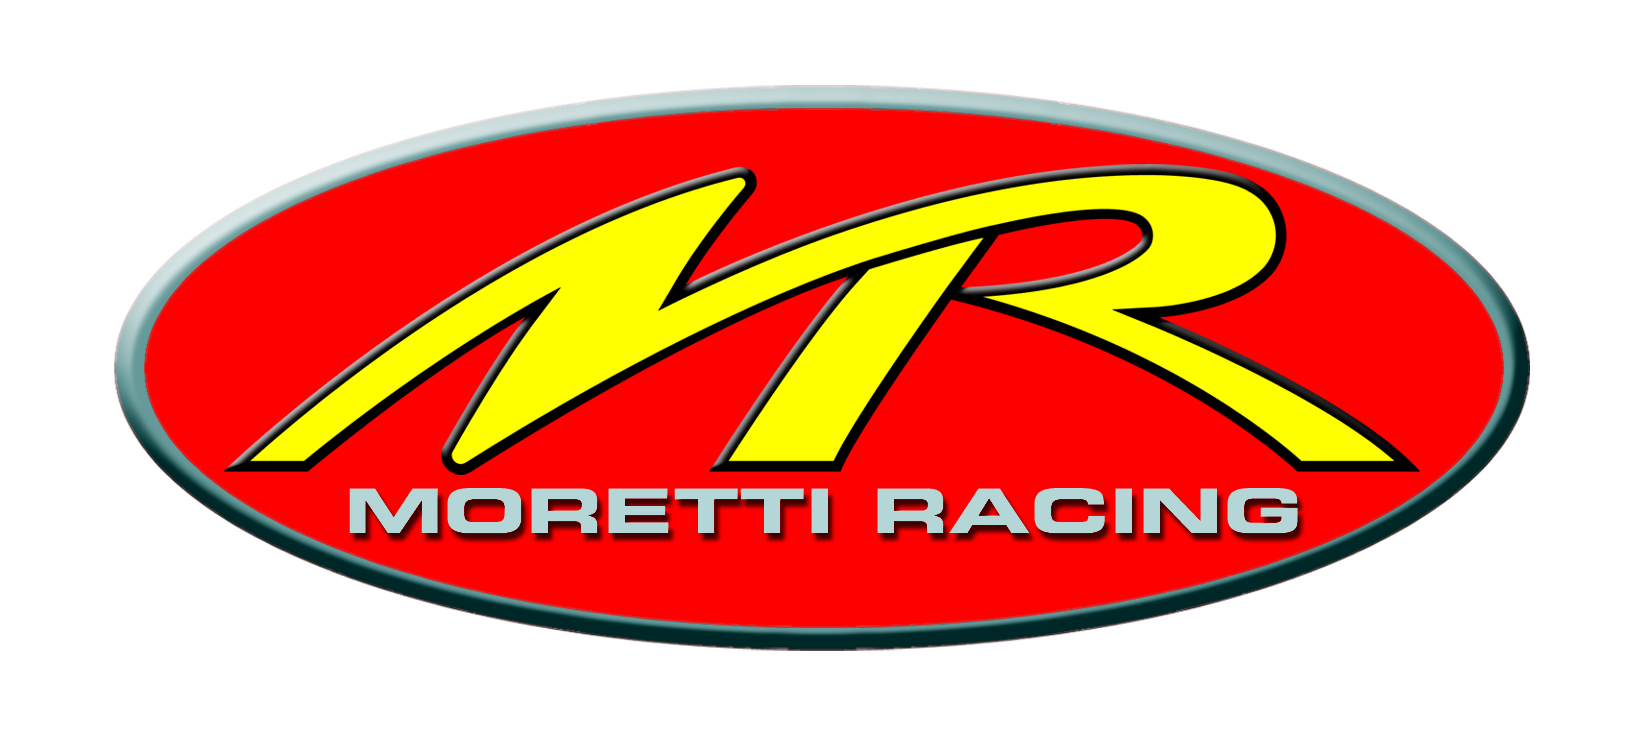 Moretti Racing ovale